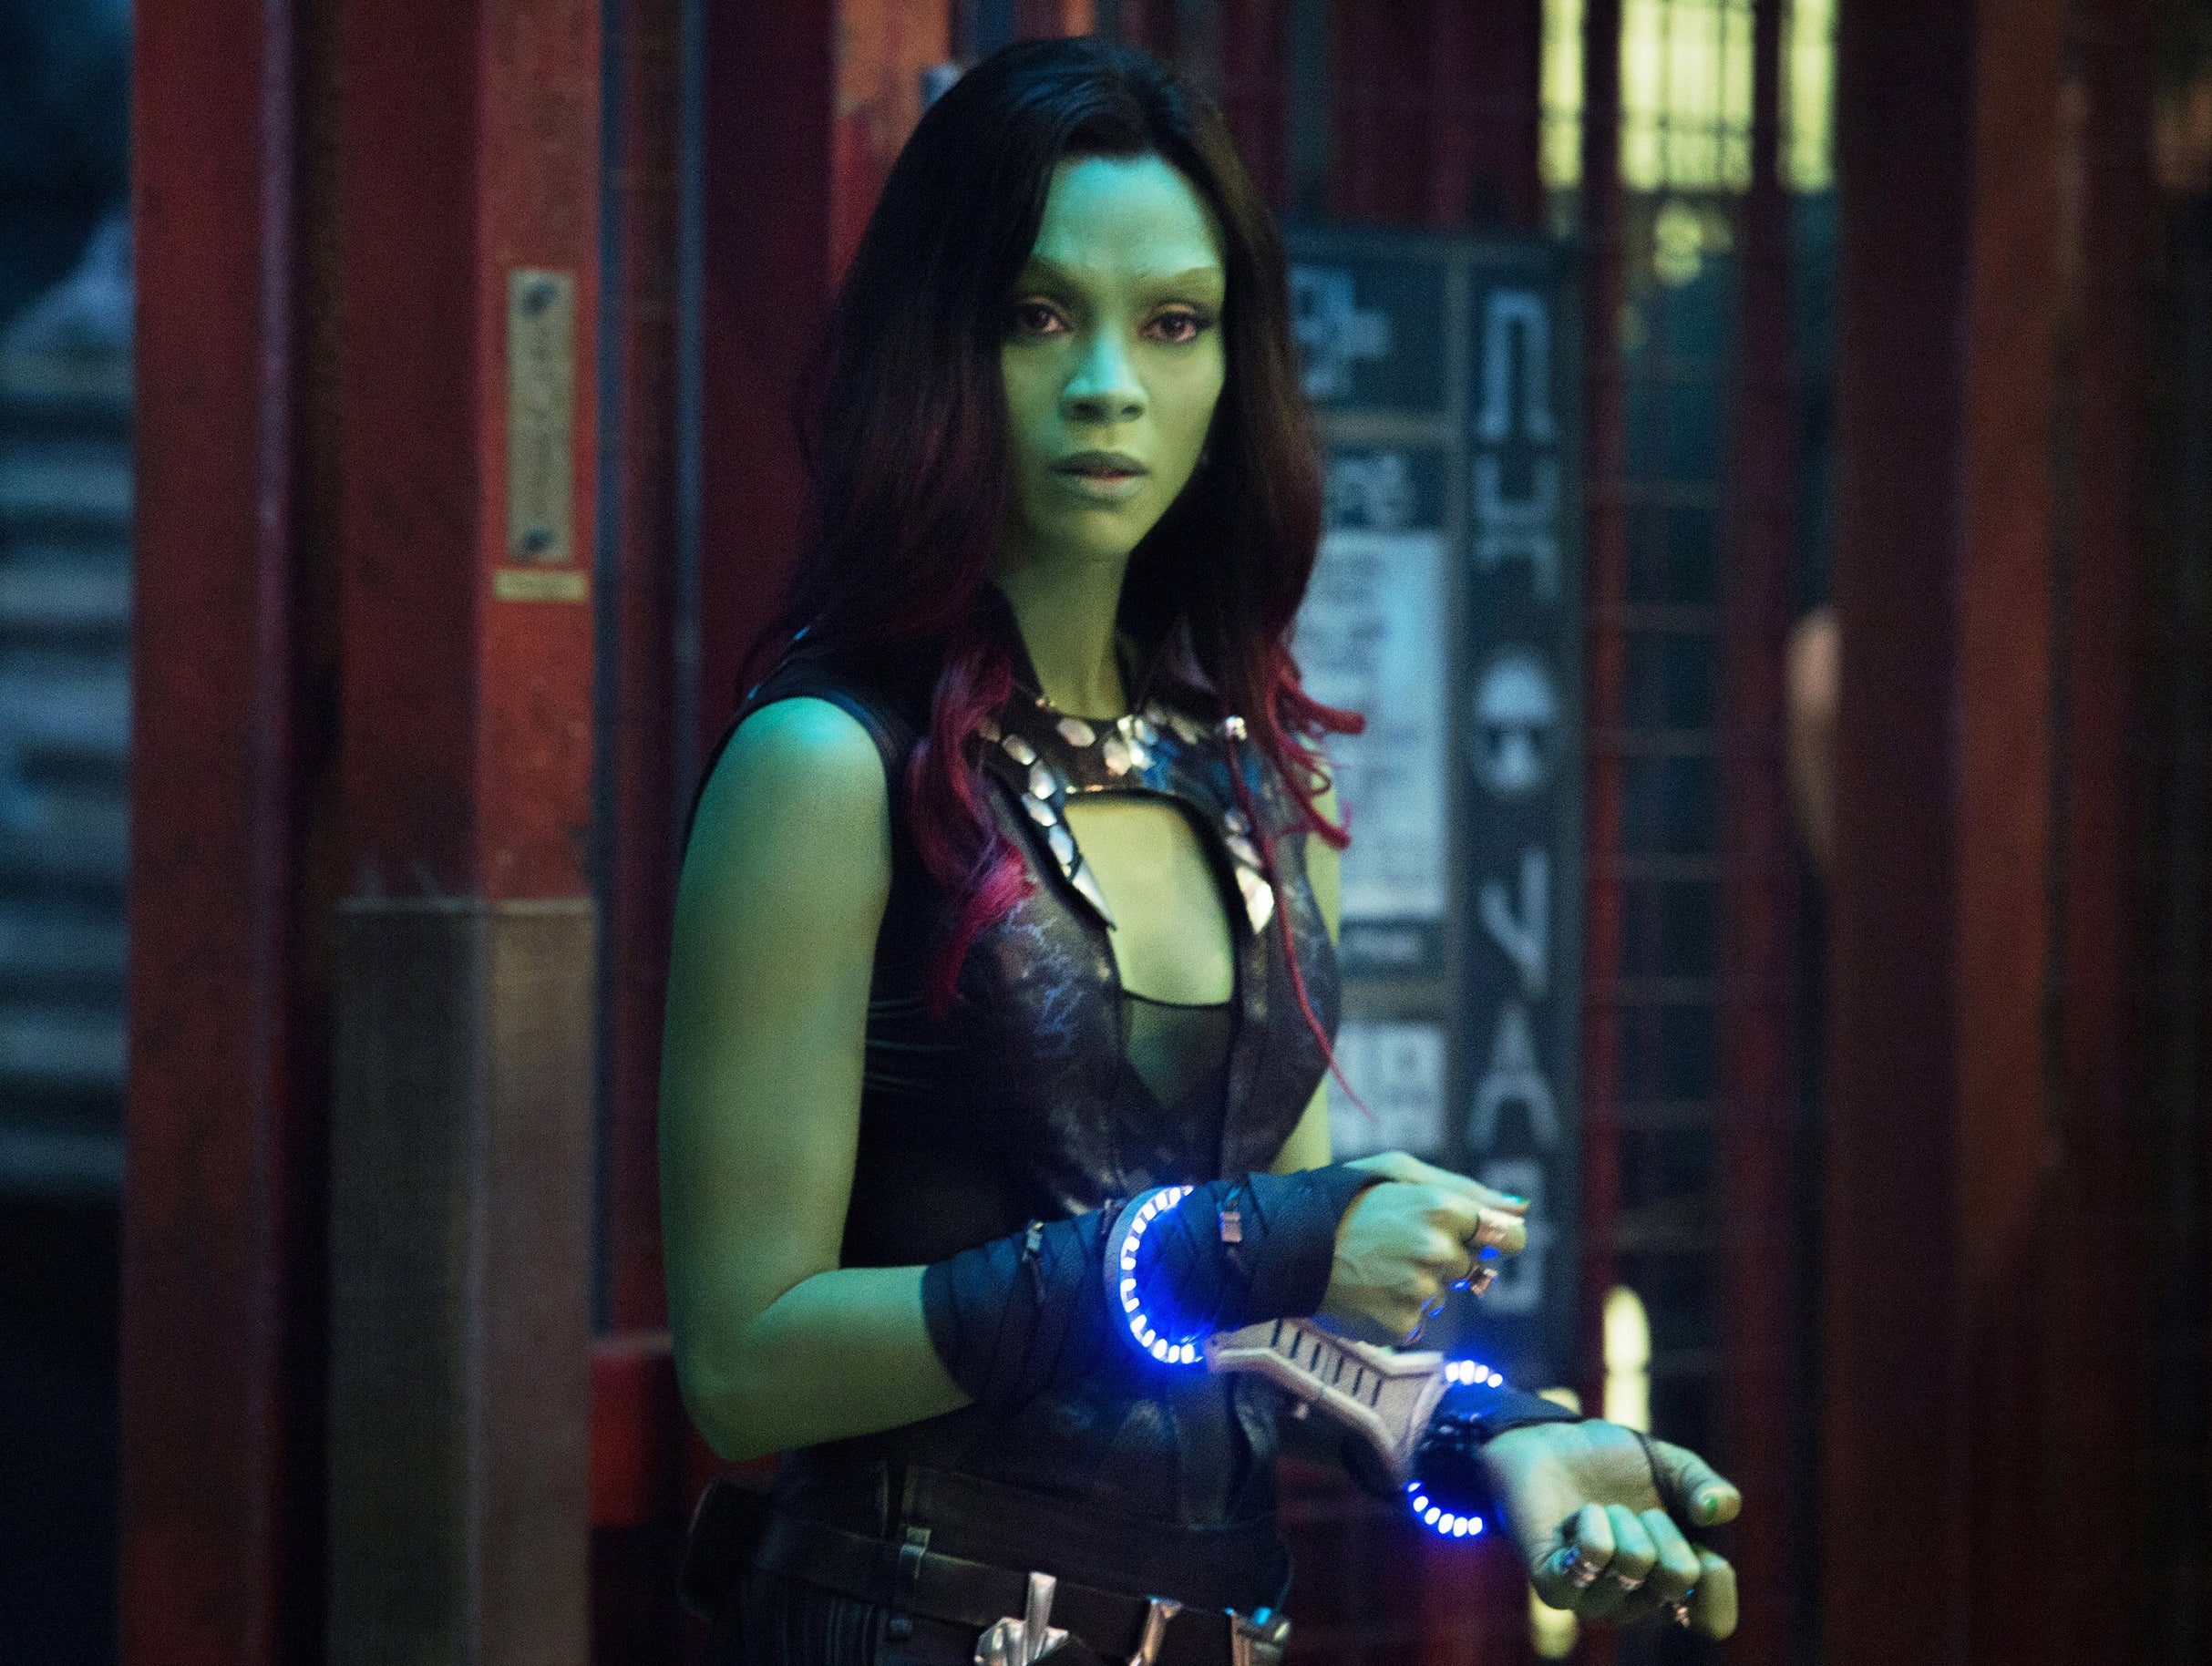 Zoe in character as Gamora